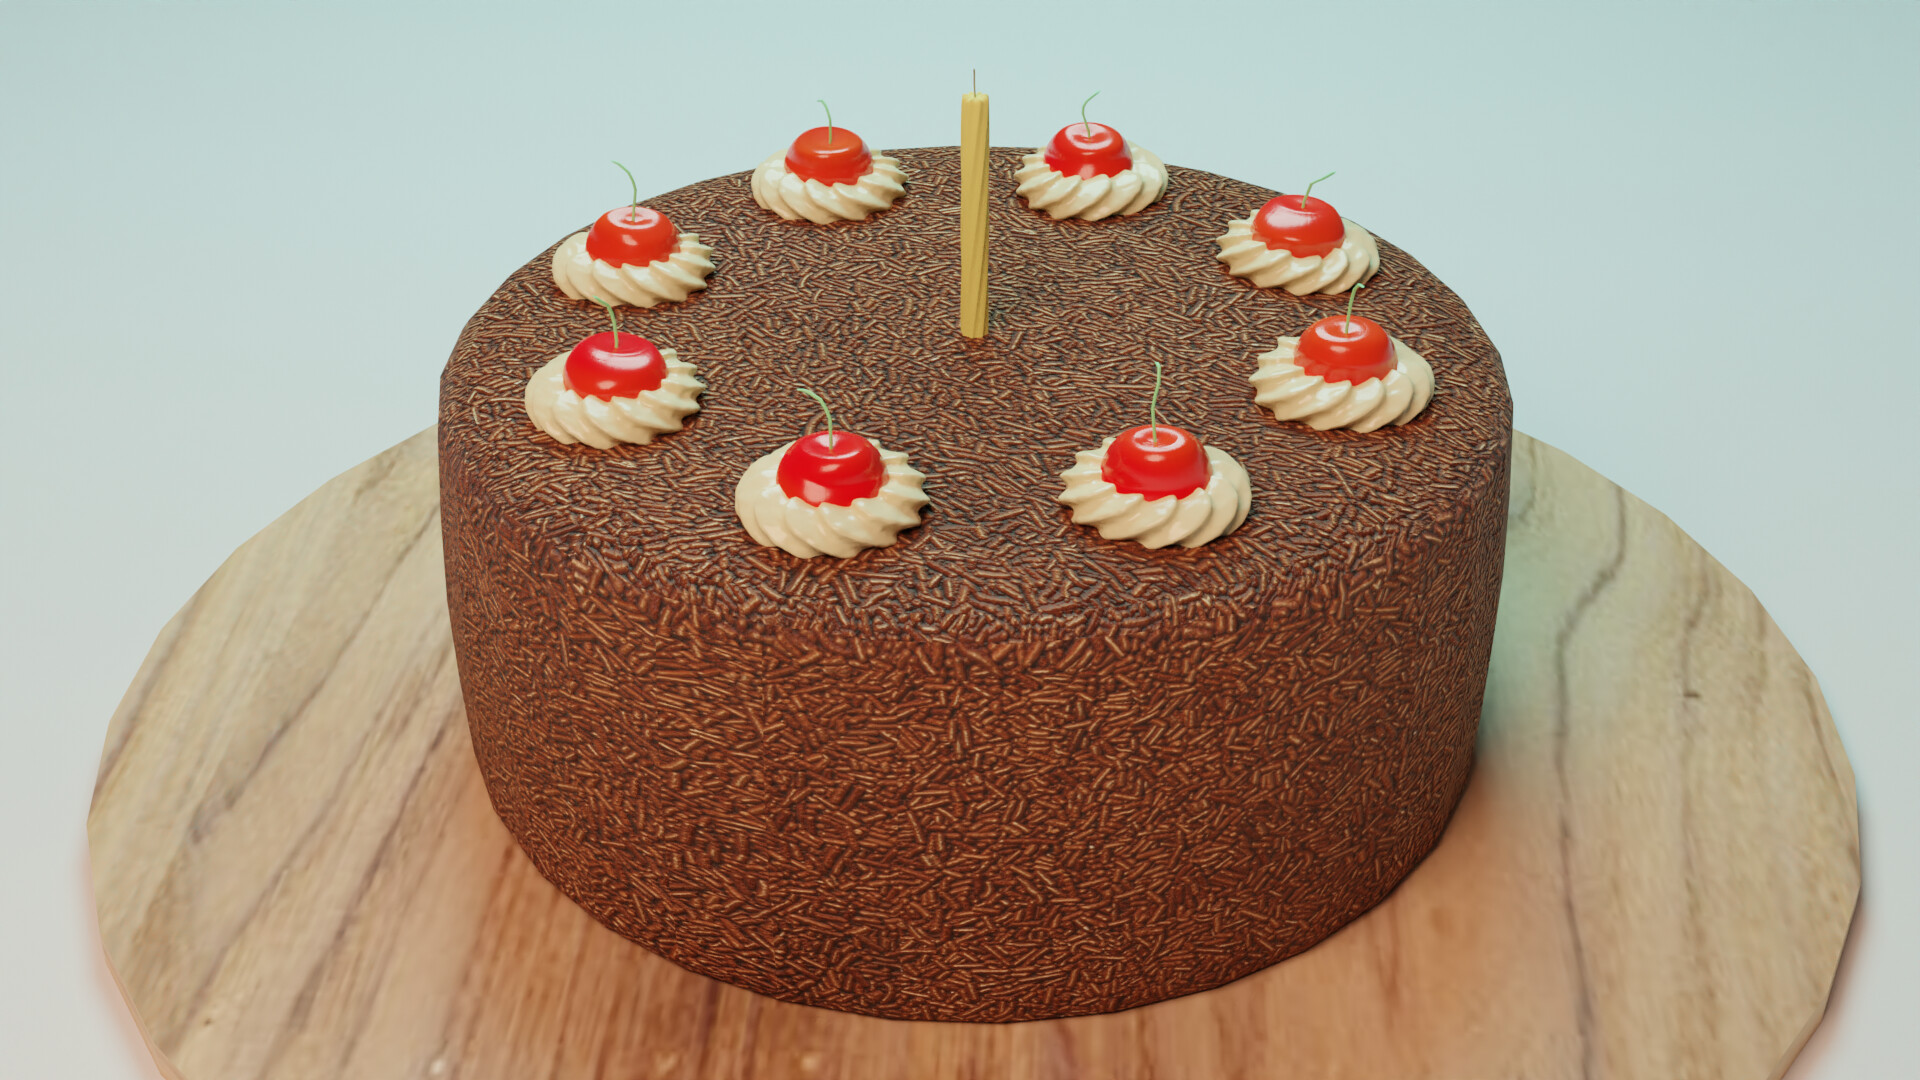 Half-Life Portal 2 Atlasand P-Body Edible Cake Topper Image ABPID03615 – A  Birthday Place